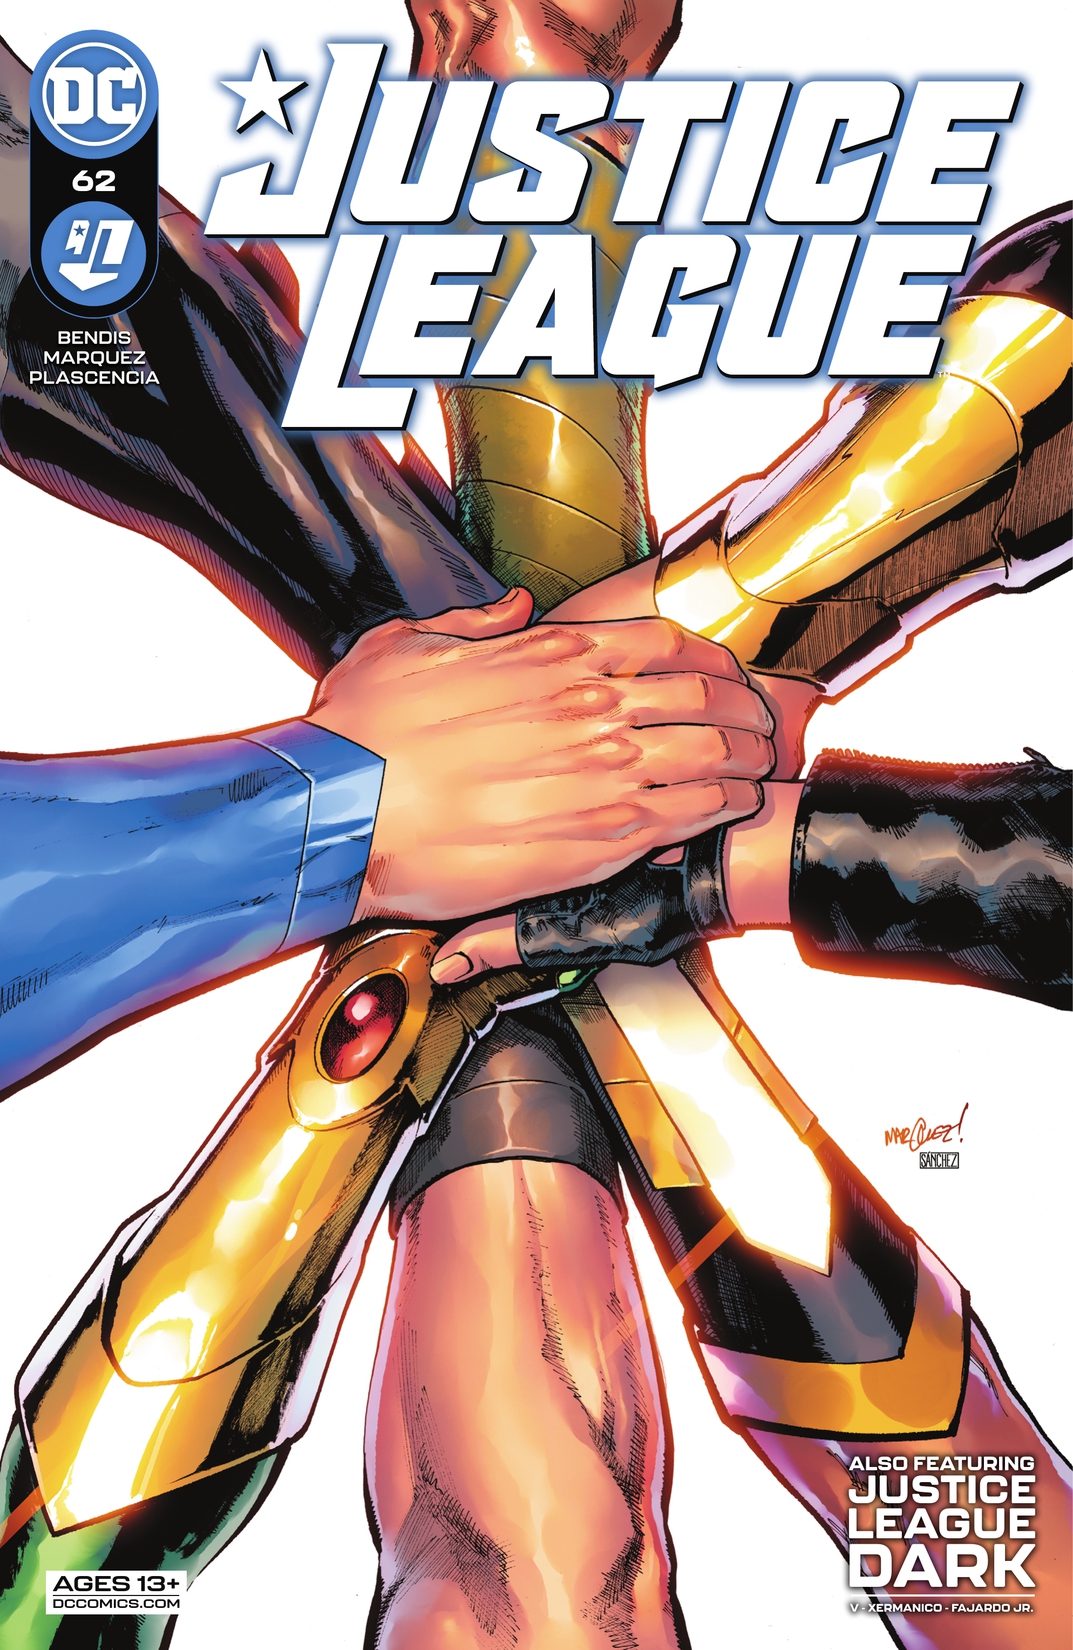 Justice League (2018-) #62 preview images